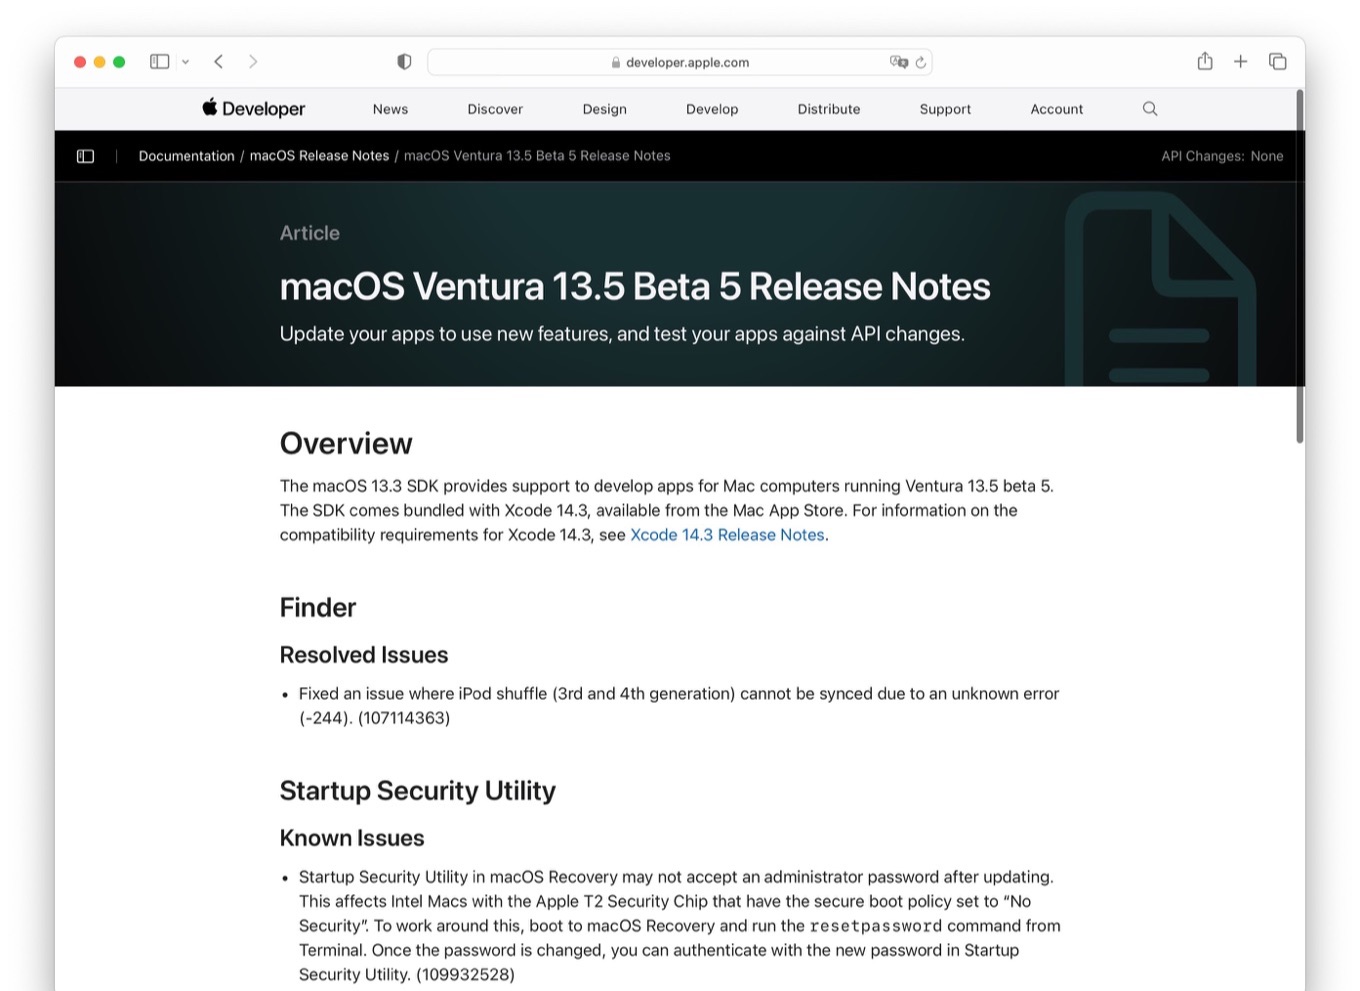 macOS Ventura 13.5 Beta 5 Release Notes